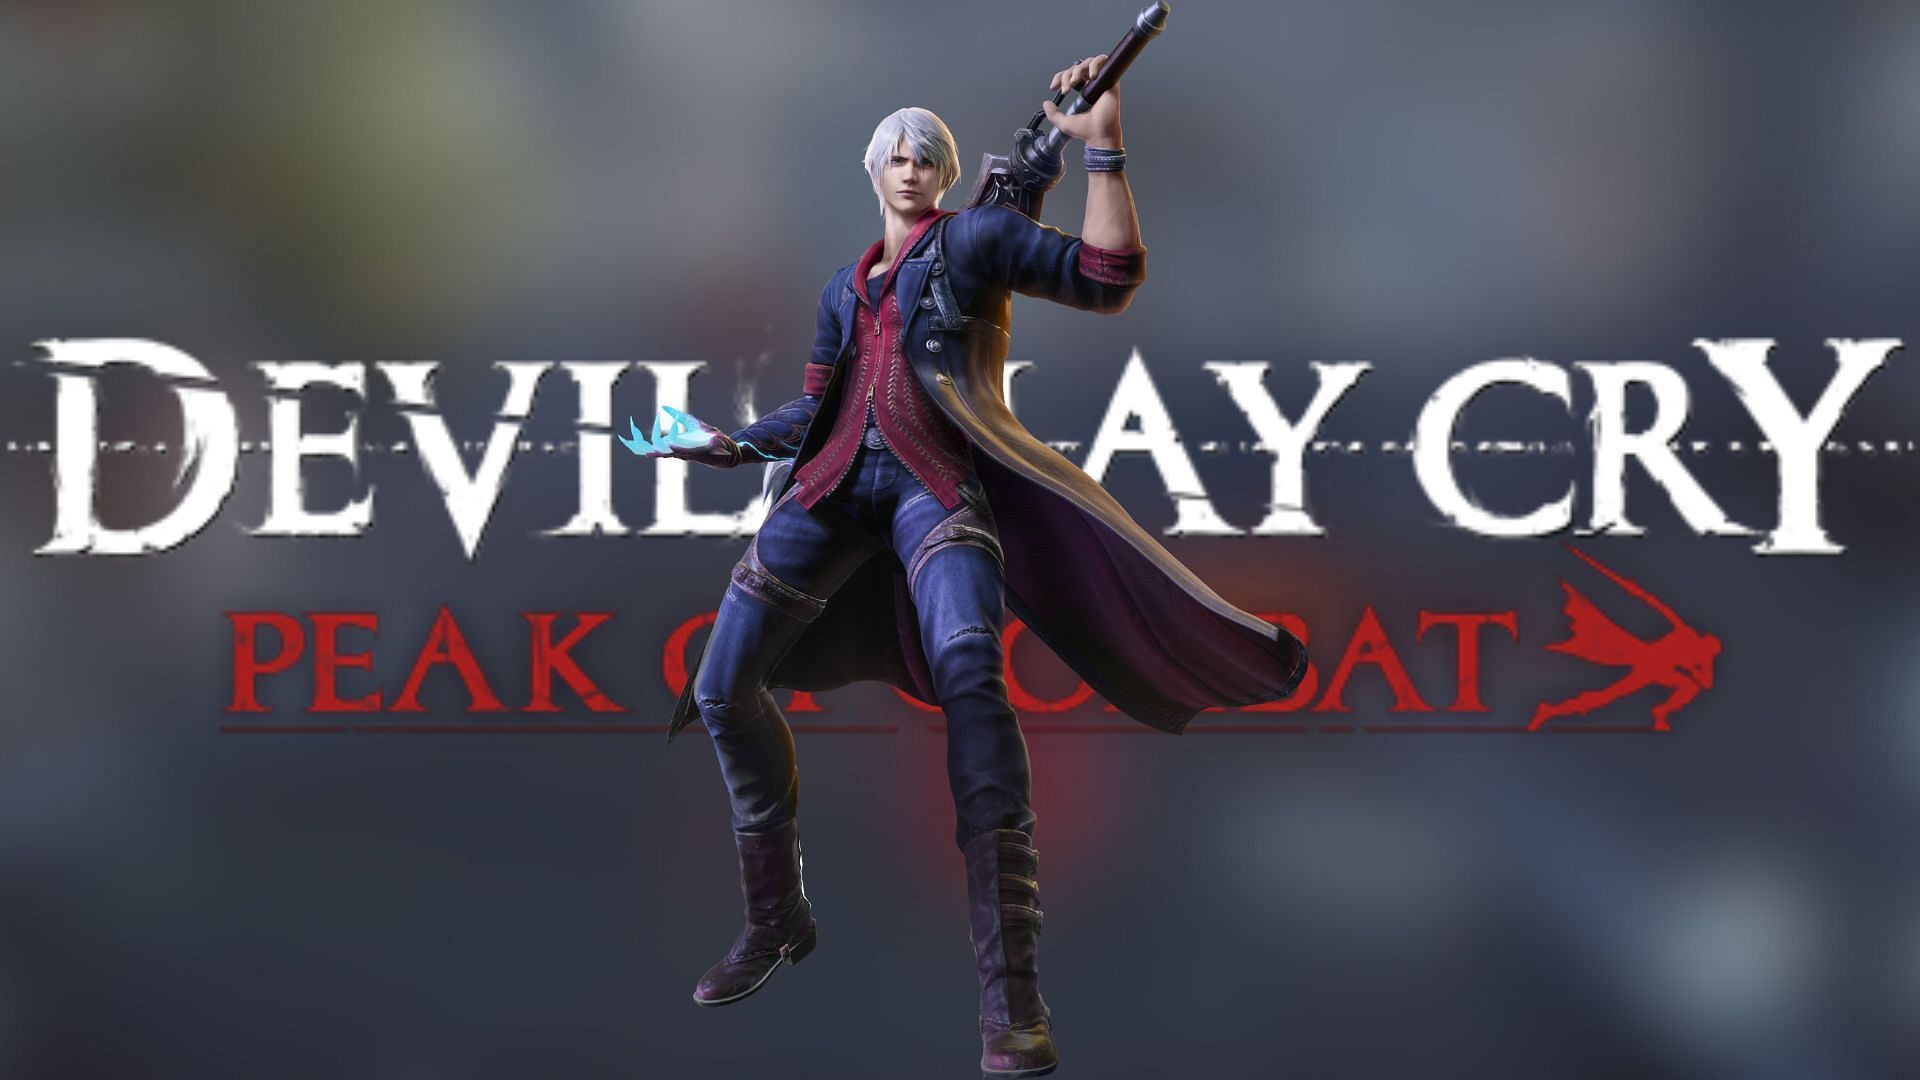 Devil May Cry: Peak of Combat Closed Beta Starts Today - GamerBraves